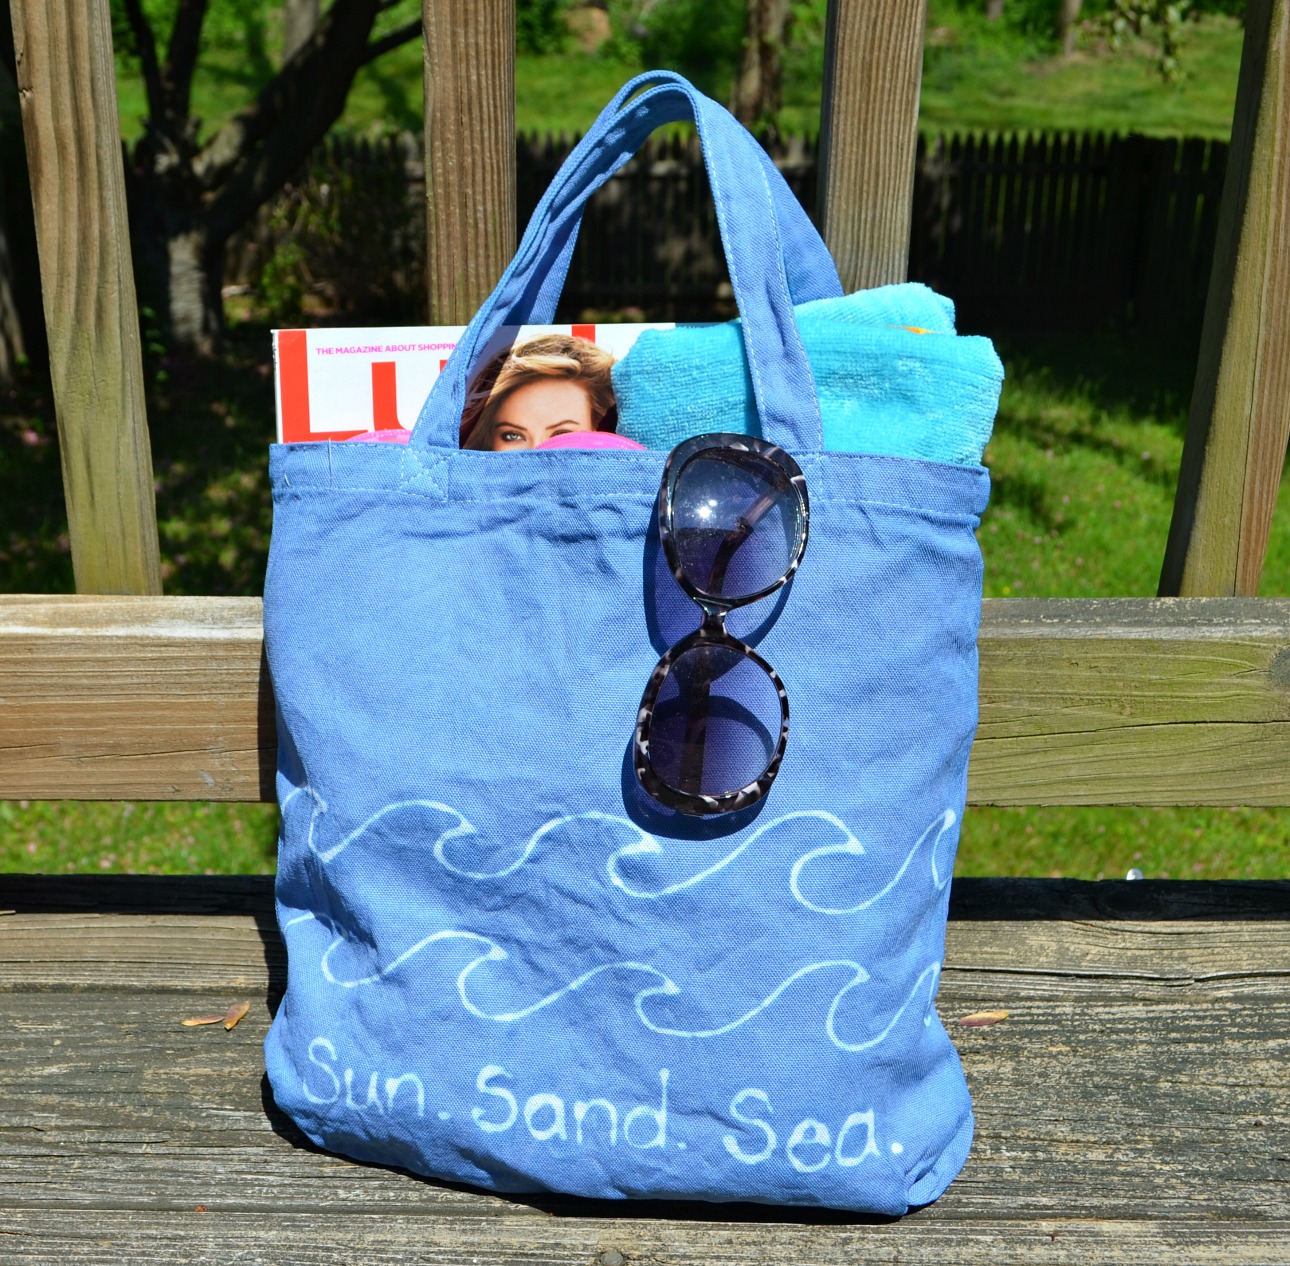 DIY Beach Bag with Dye Resist Technique